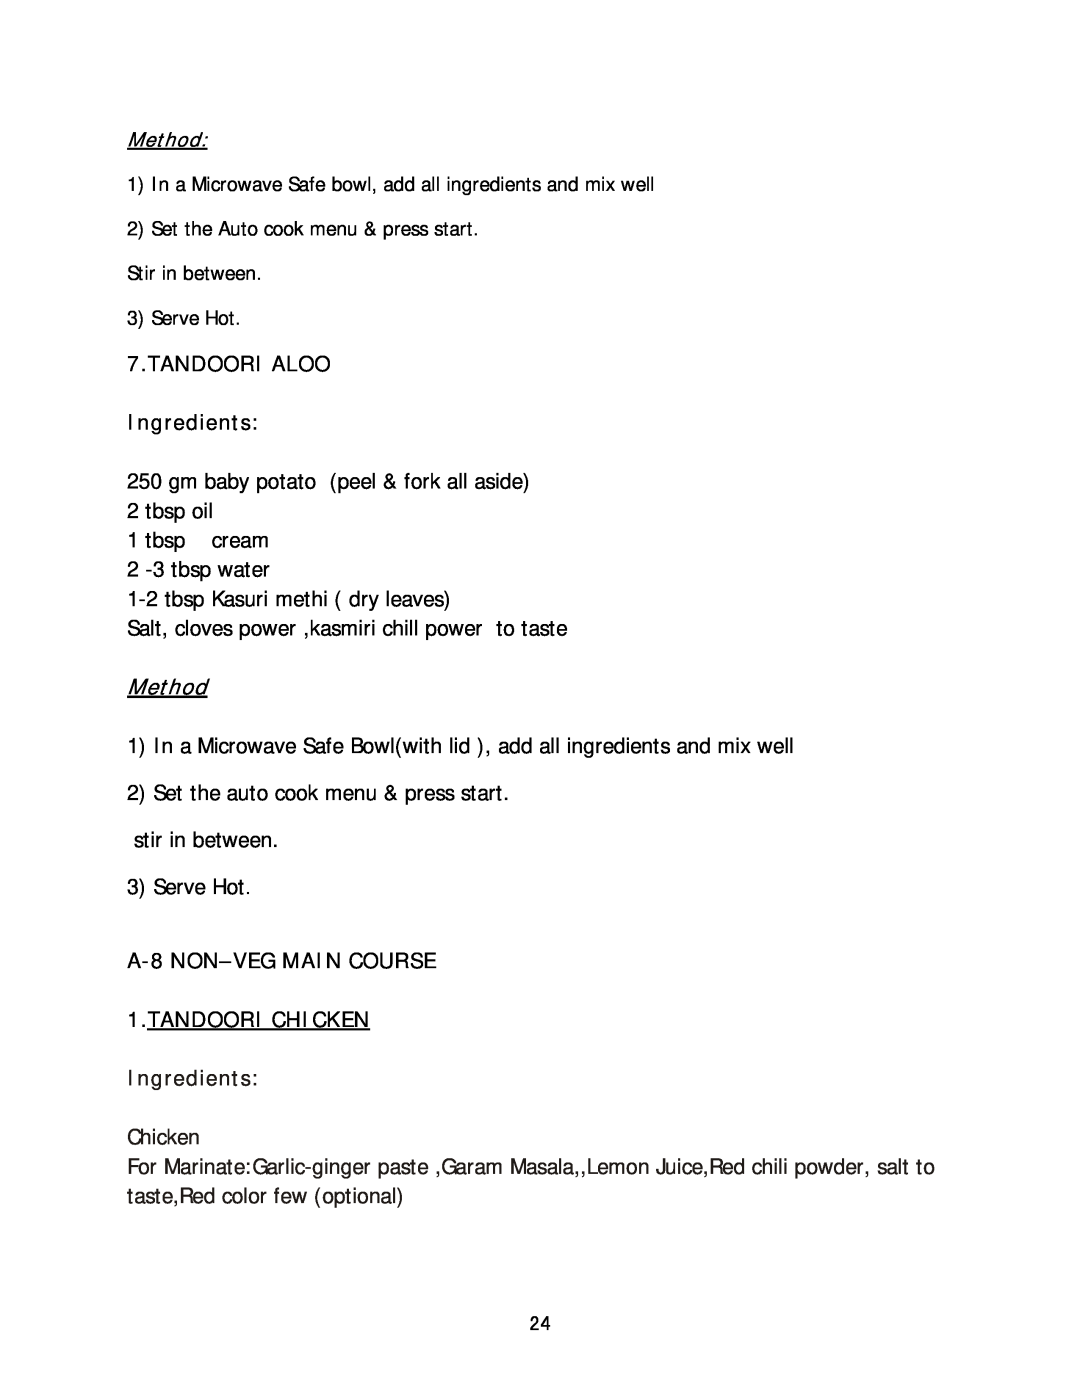 Haier HIL 2810EGCB manual TANDOORI ALOO Ingredients, Method, A-8 NON-VEG MAIN COURSE 1.TANDOORI CHICKEN 